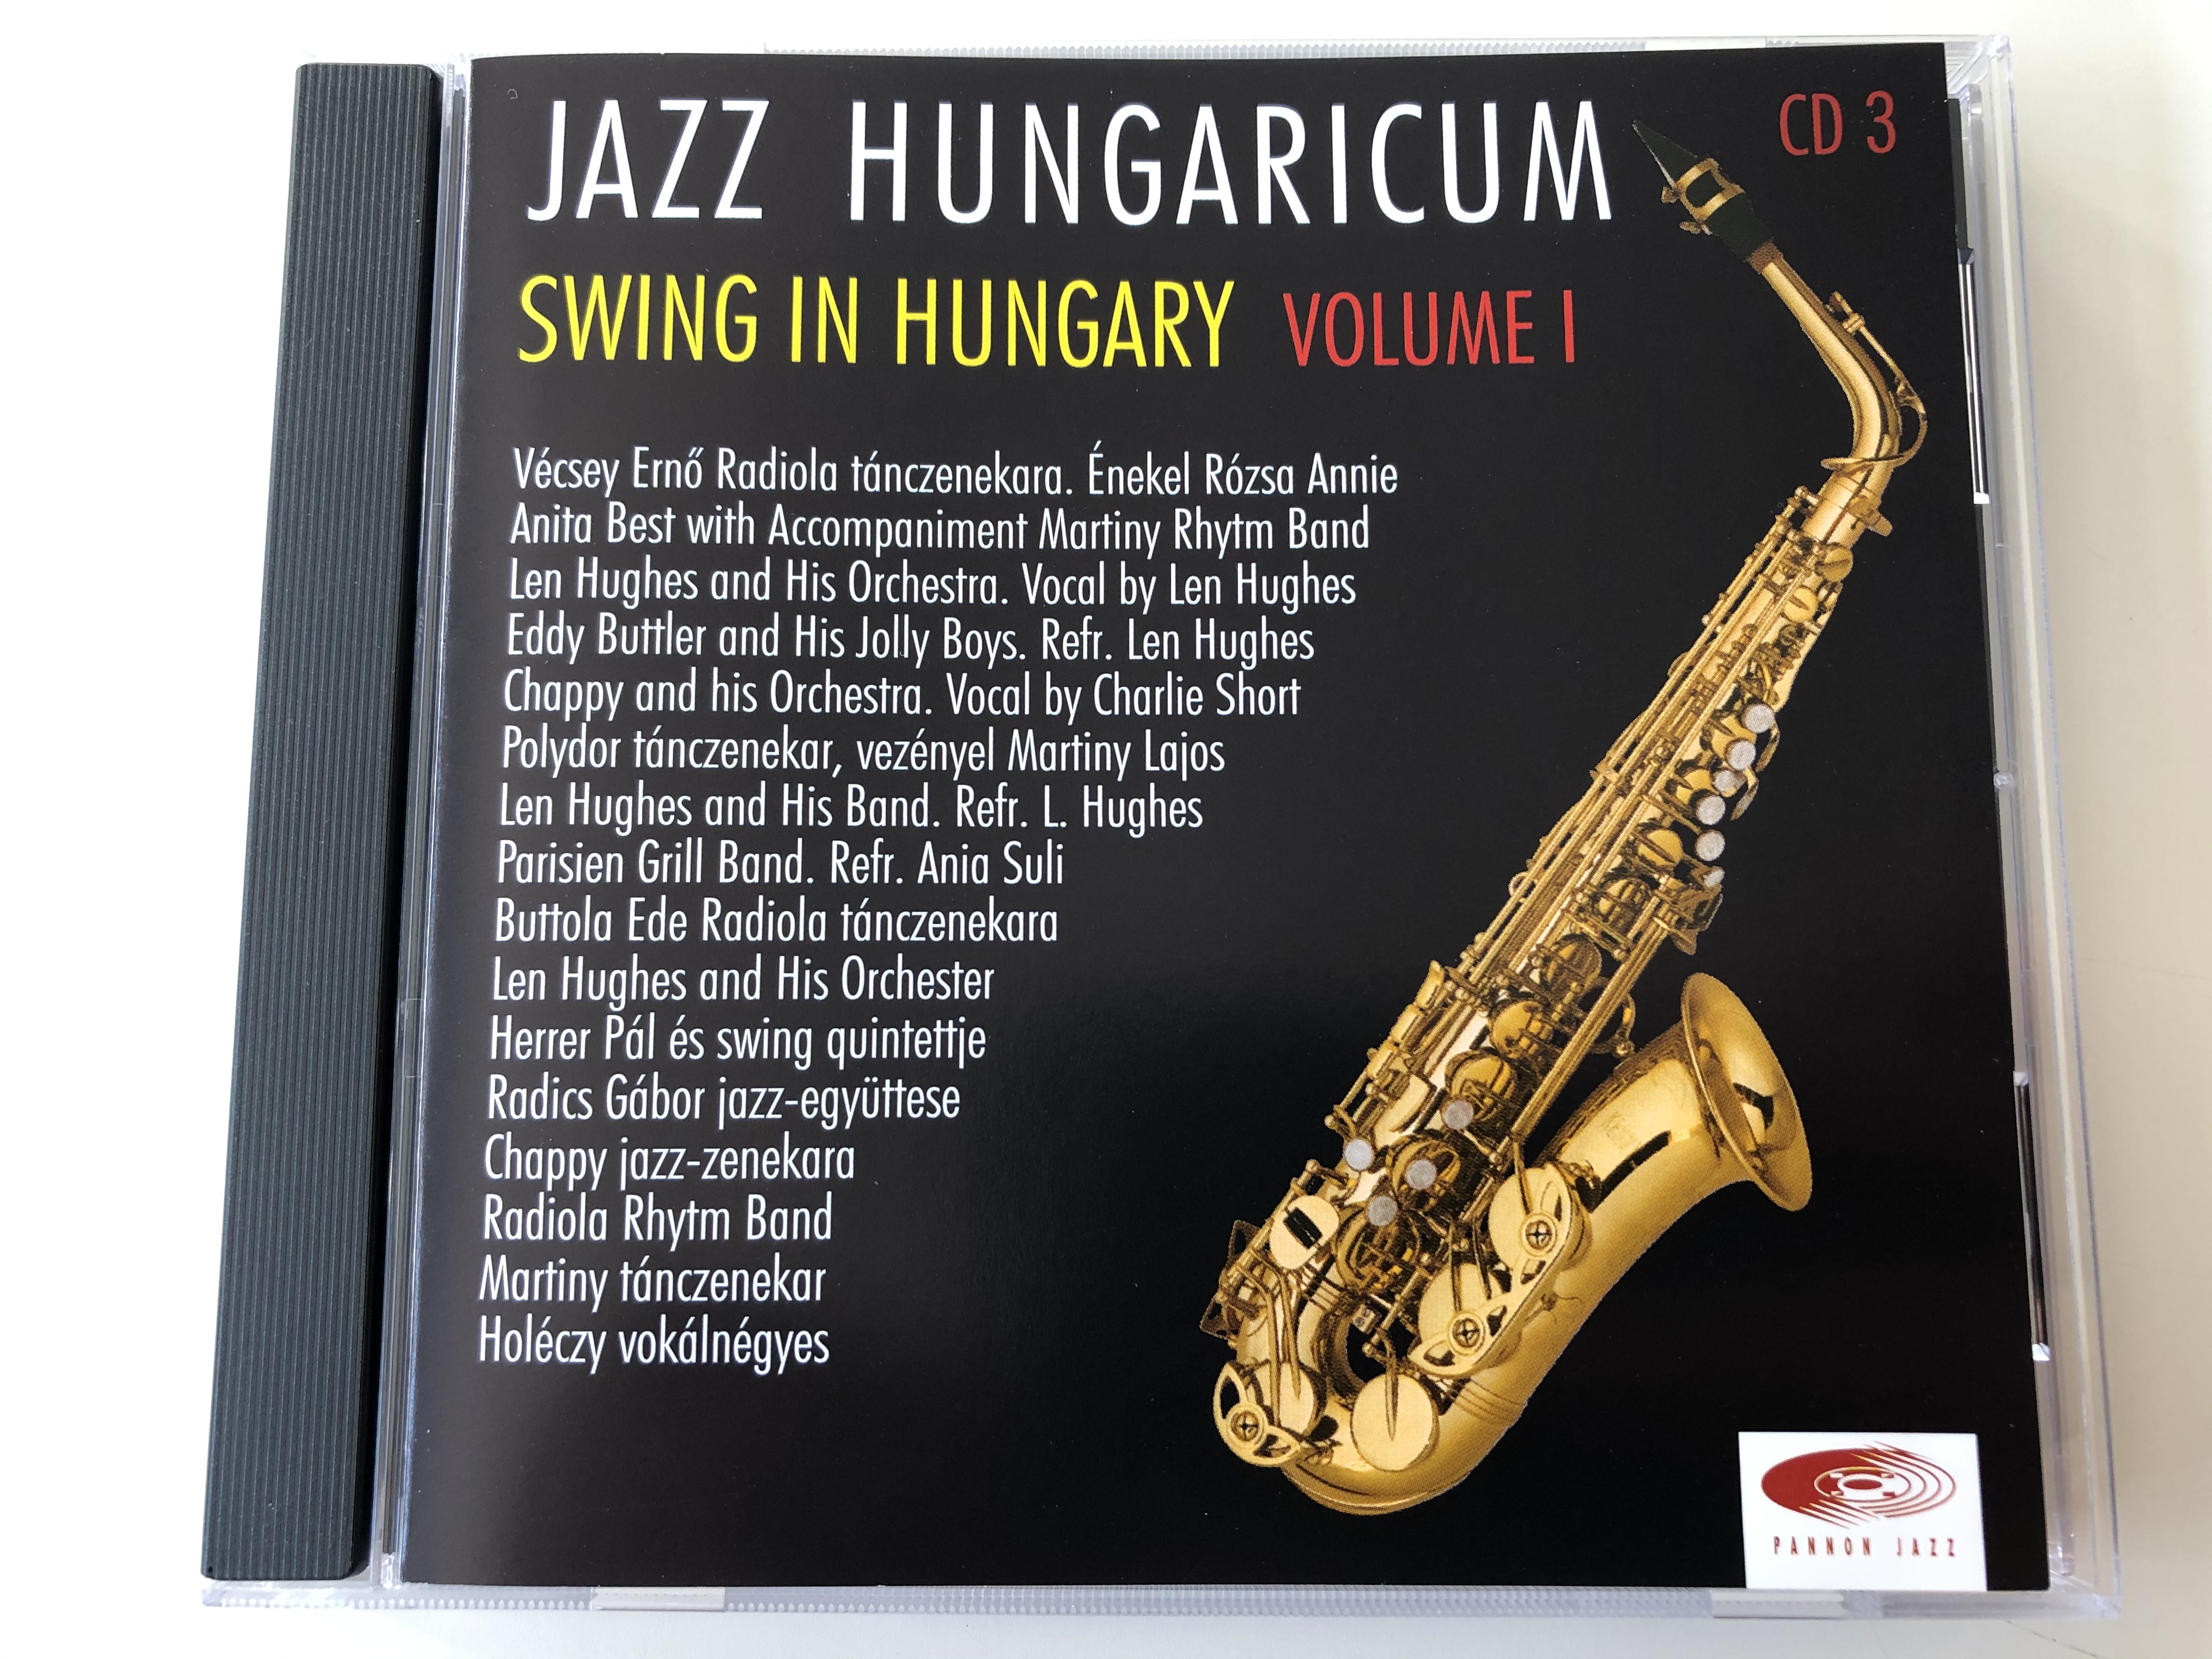 jazz-hungaricum-swing-in-hungary-volume-1-cd-3-vecsey-erno-radiola-tanczenekara.-enekel-rozsa-annie-anita-best-with-accompaniment-martiny-rhytm-band-len-hughes-and-his-orchestra-pannon-j-1-.jpg